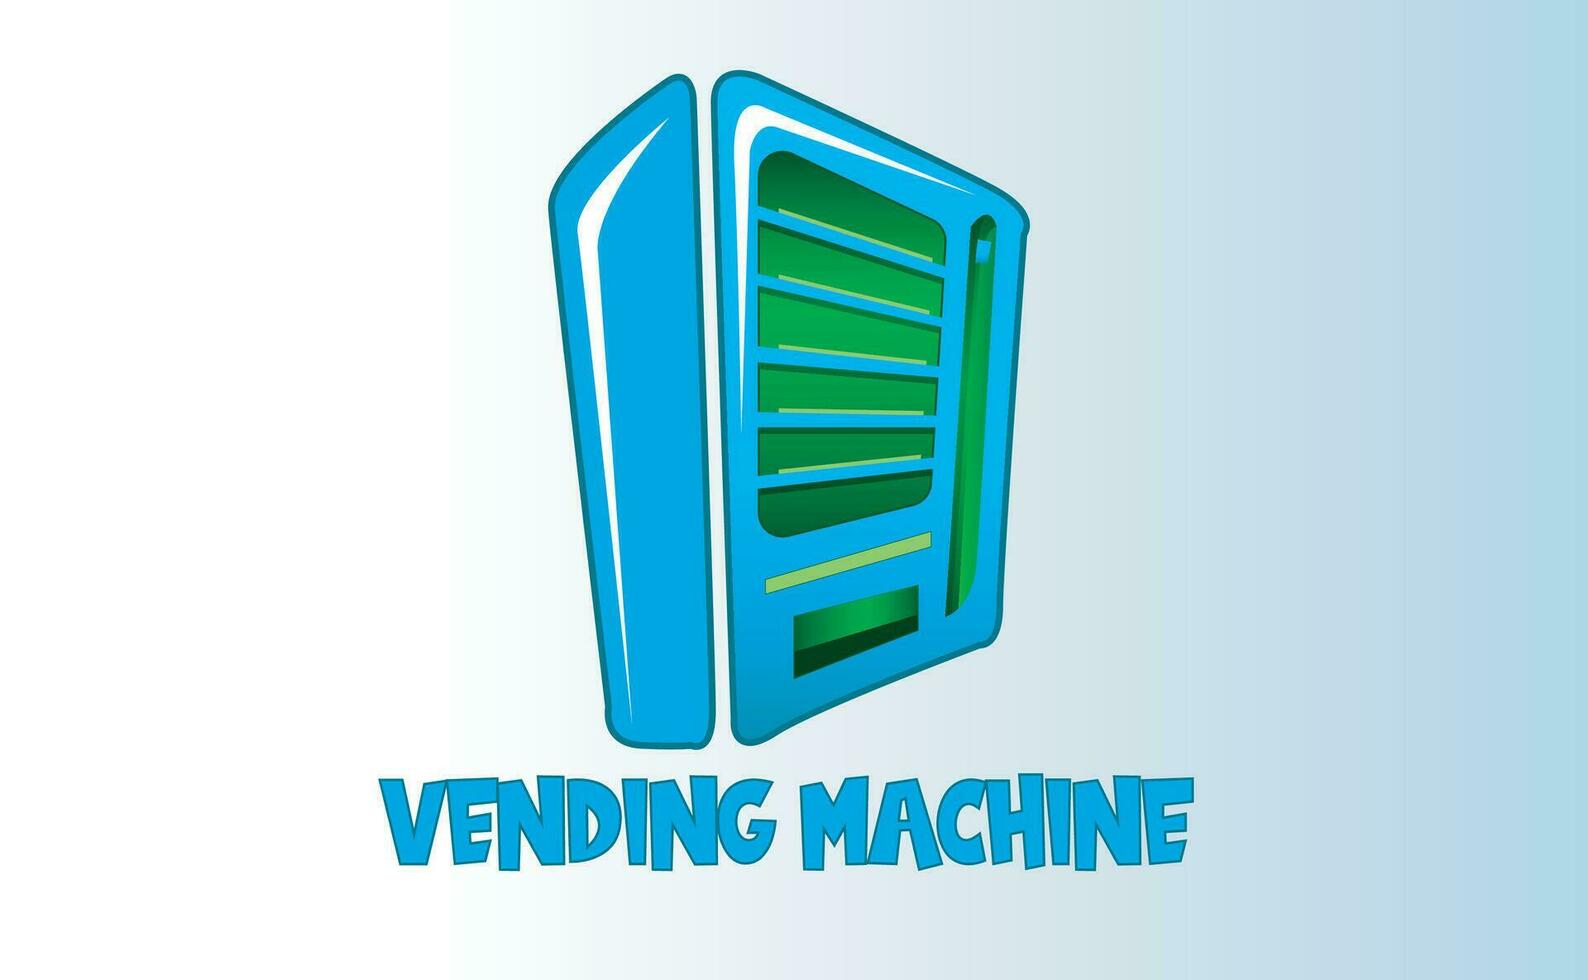 venta máquina logo vector